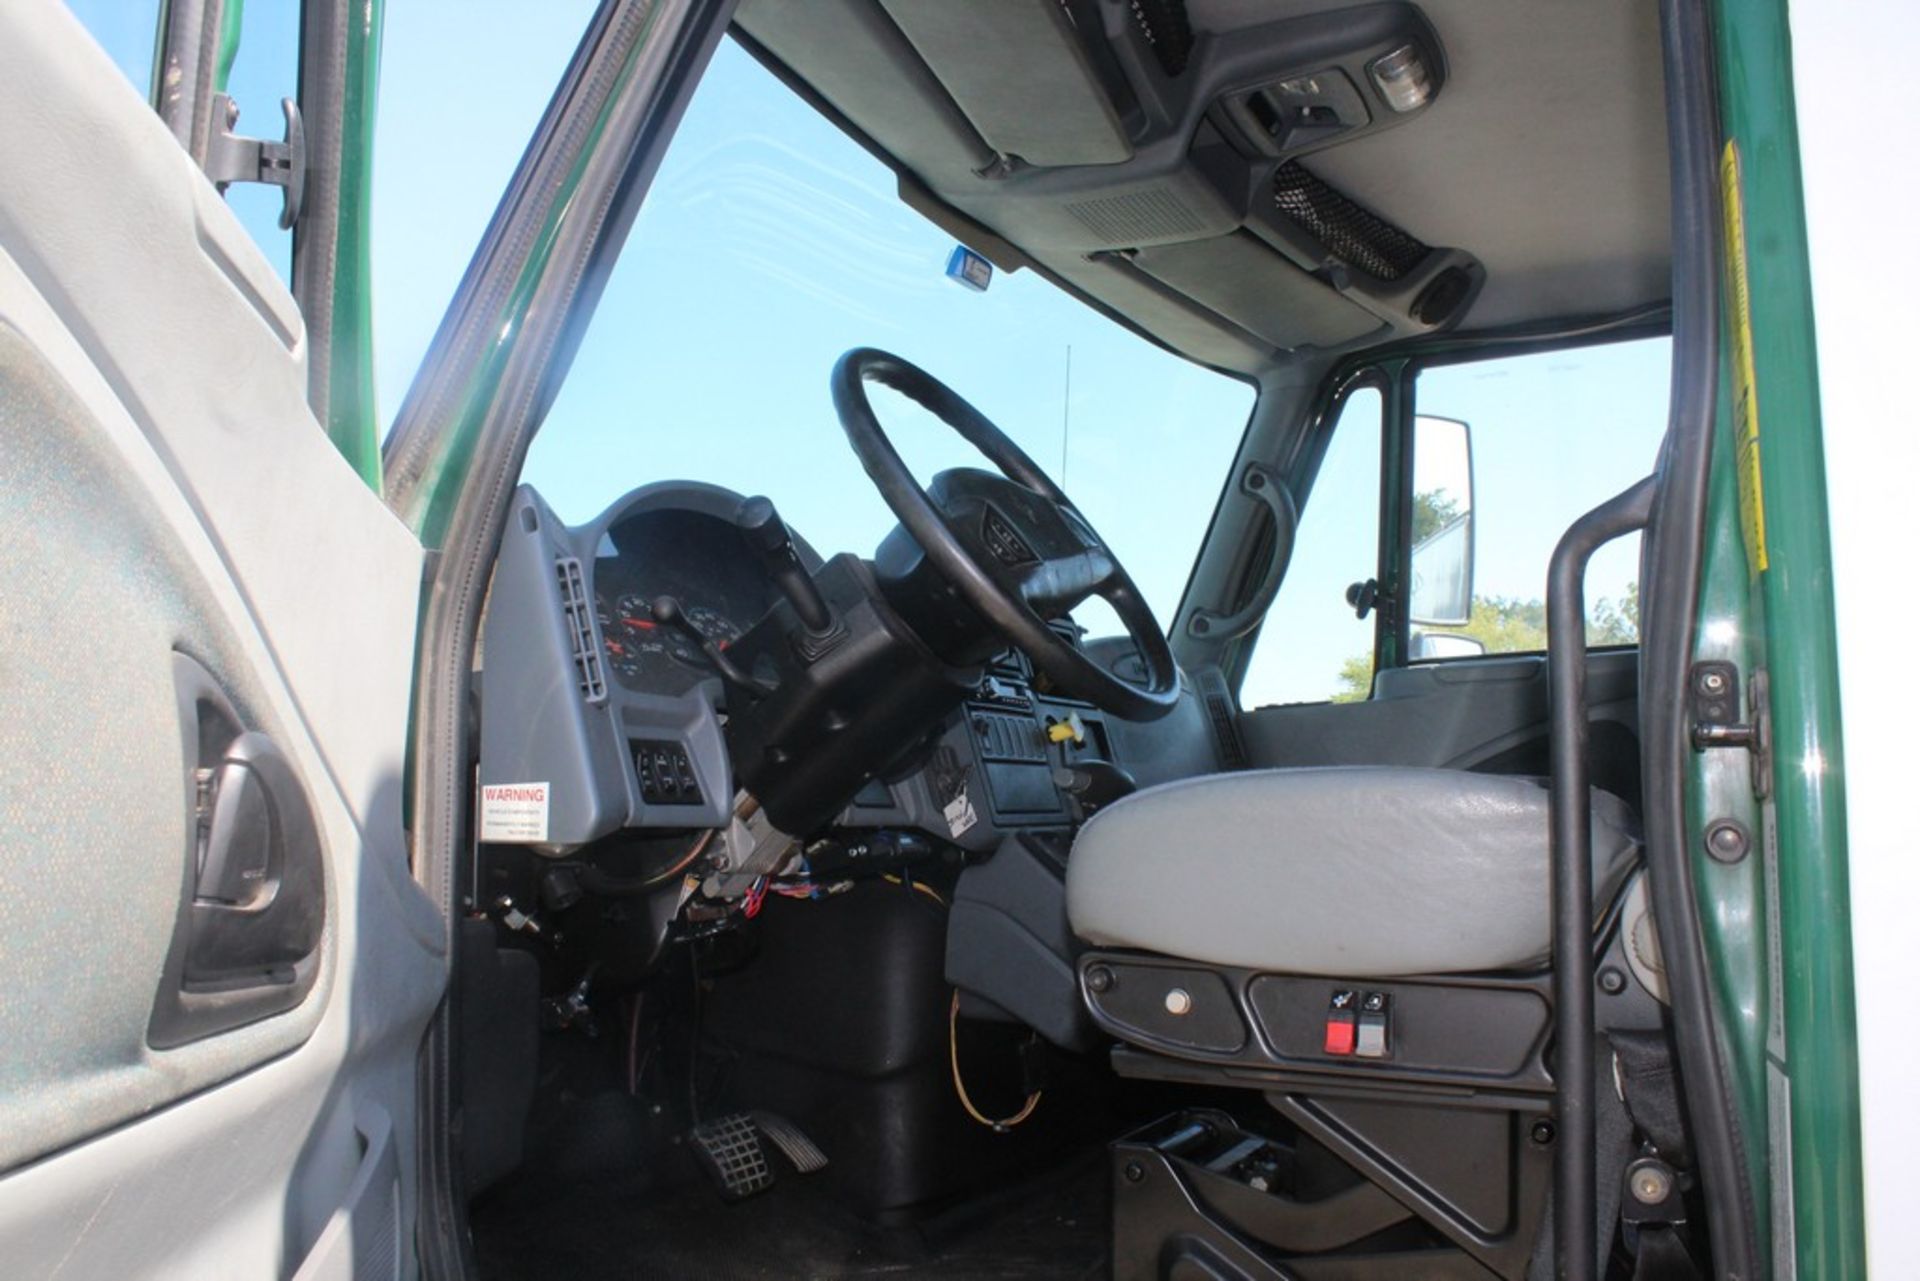 2007 International 5 Door Model 4400 Beverage Truck, VIN: 1HTMKAAN57H517188, Automatic Transmission, - Image 6 of 10